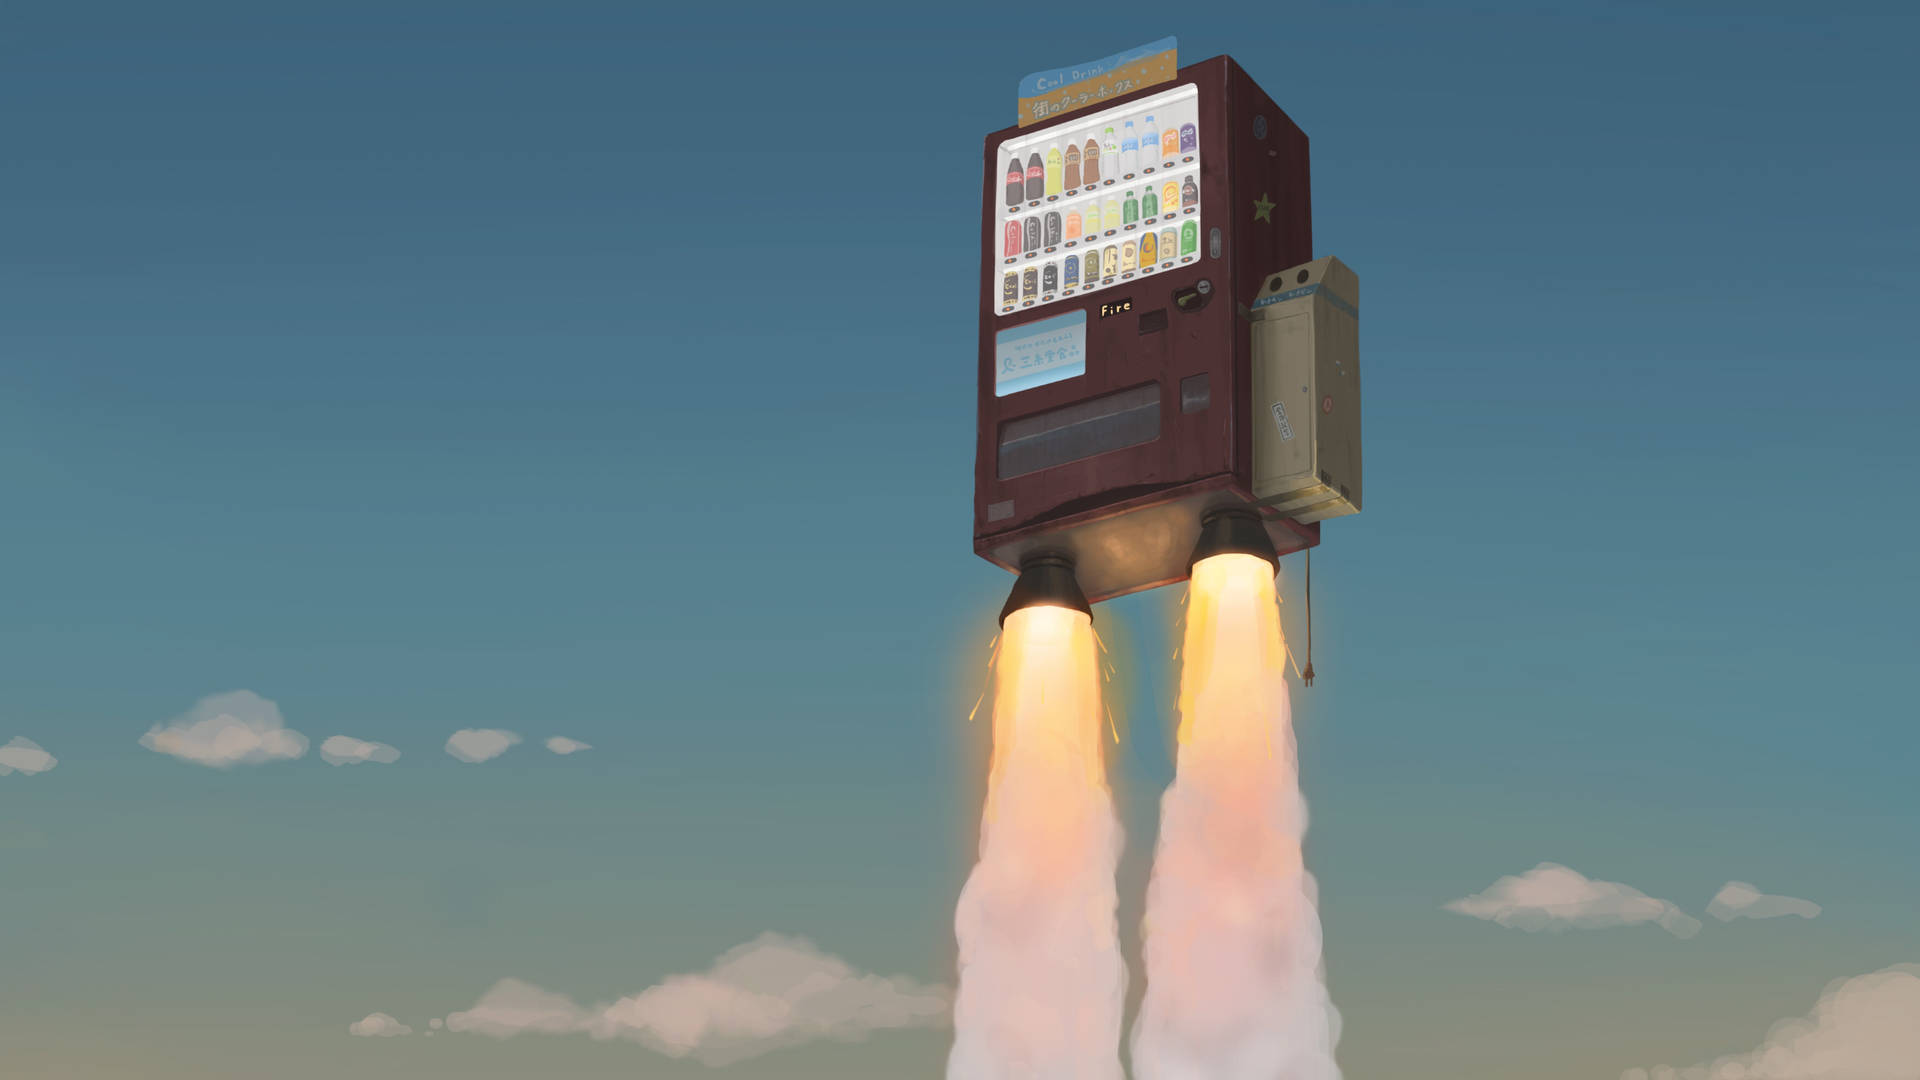 Rocket Vending Machine